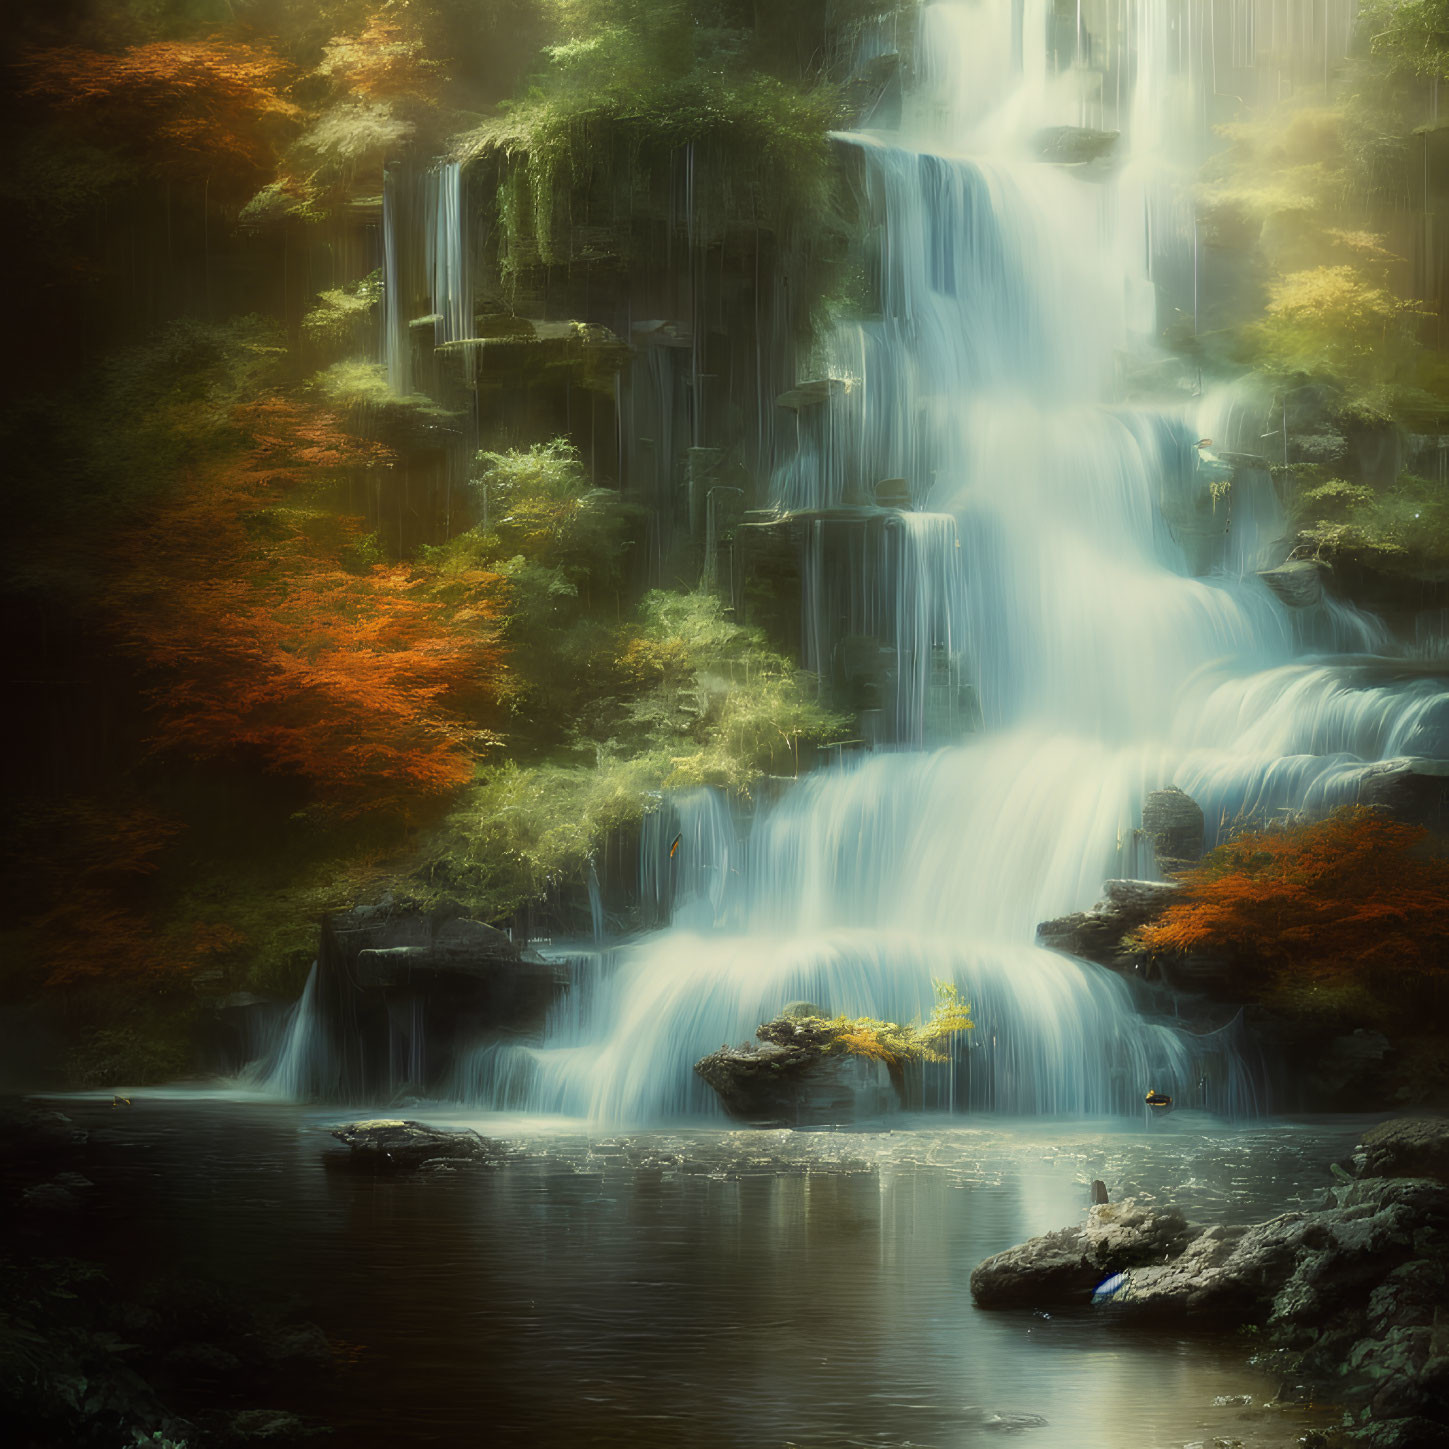 Serene autumn waterfall with misty pool